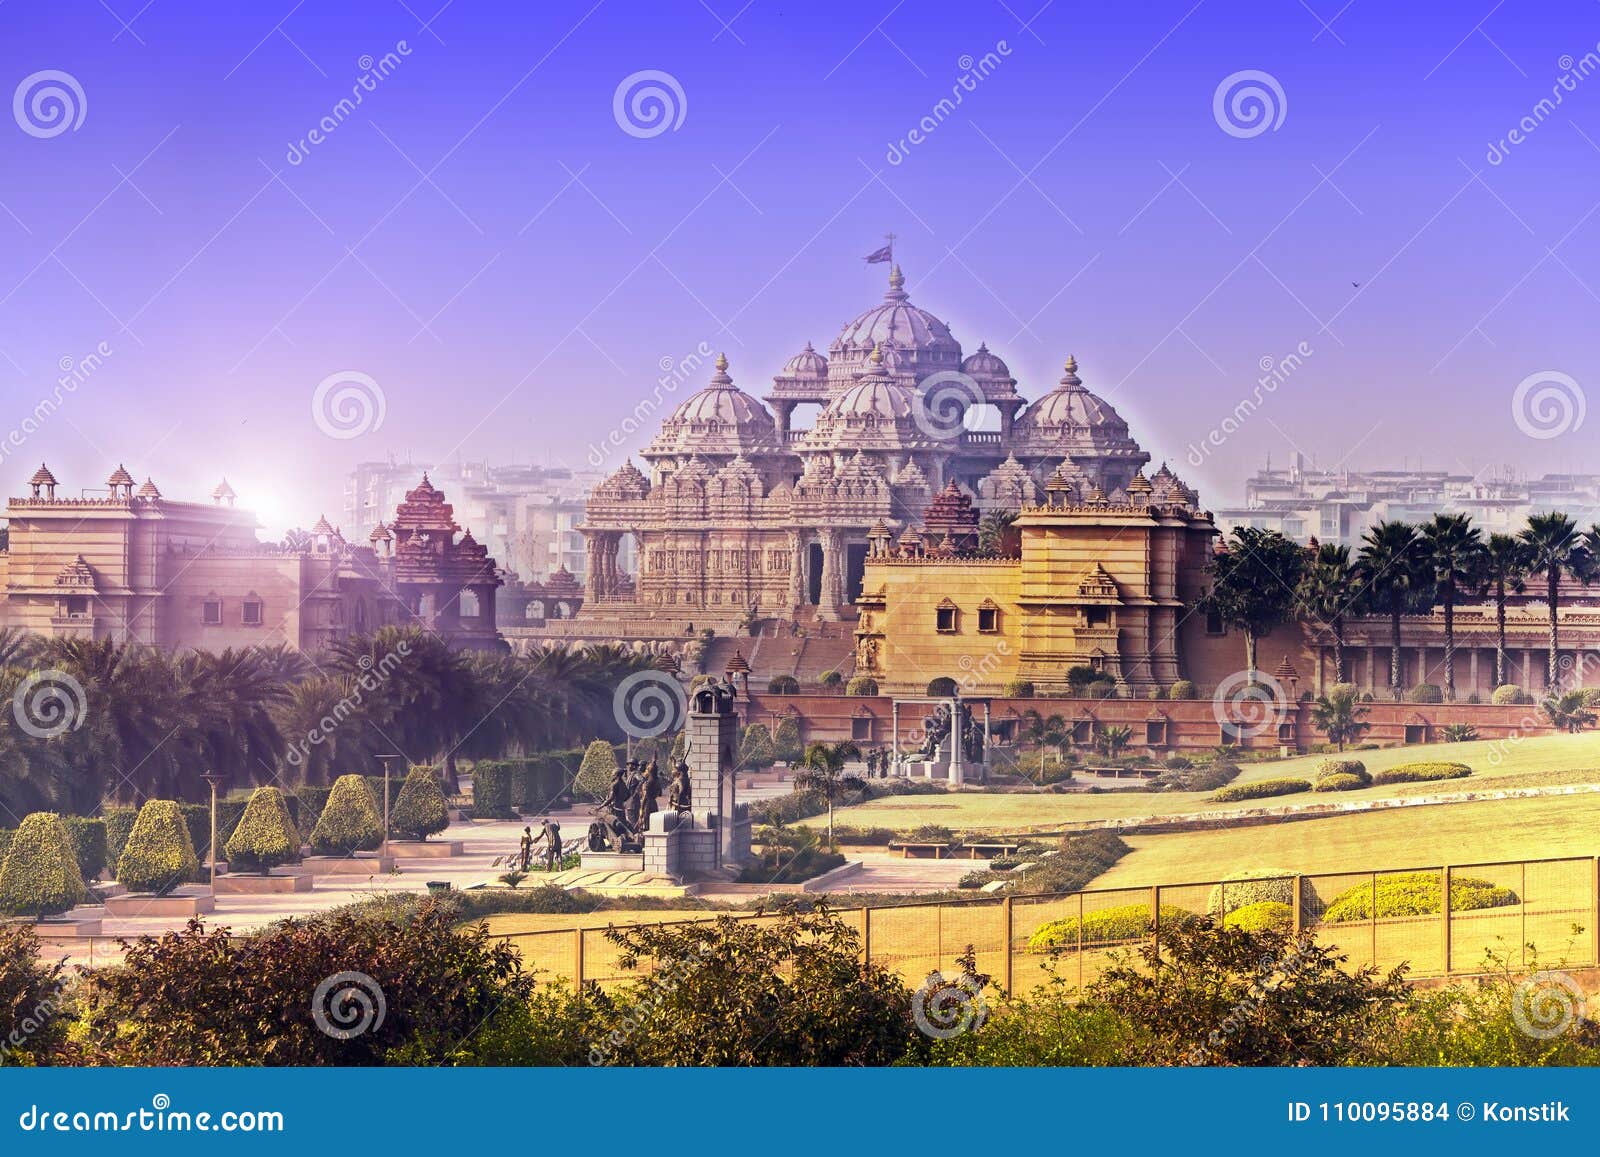 temple akshardham delhi, india in sunny day